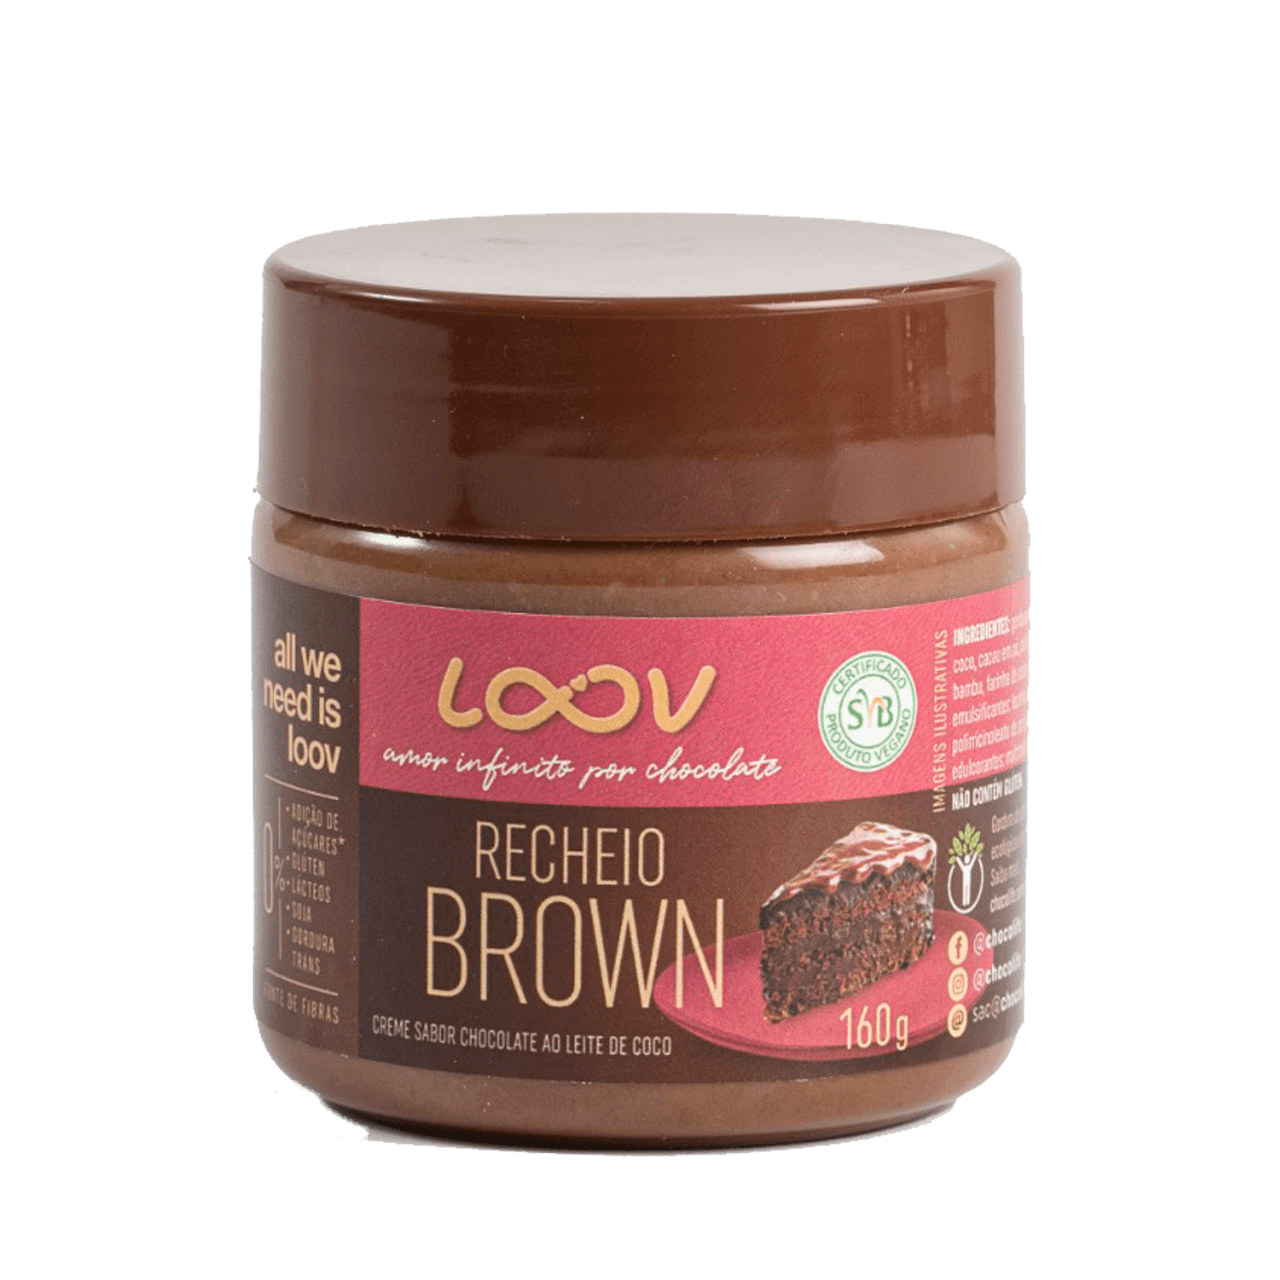 Creme de Chocolate Zero Açúcar Loov Recheio Brown 160g Chocolife